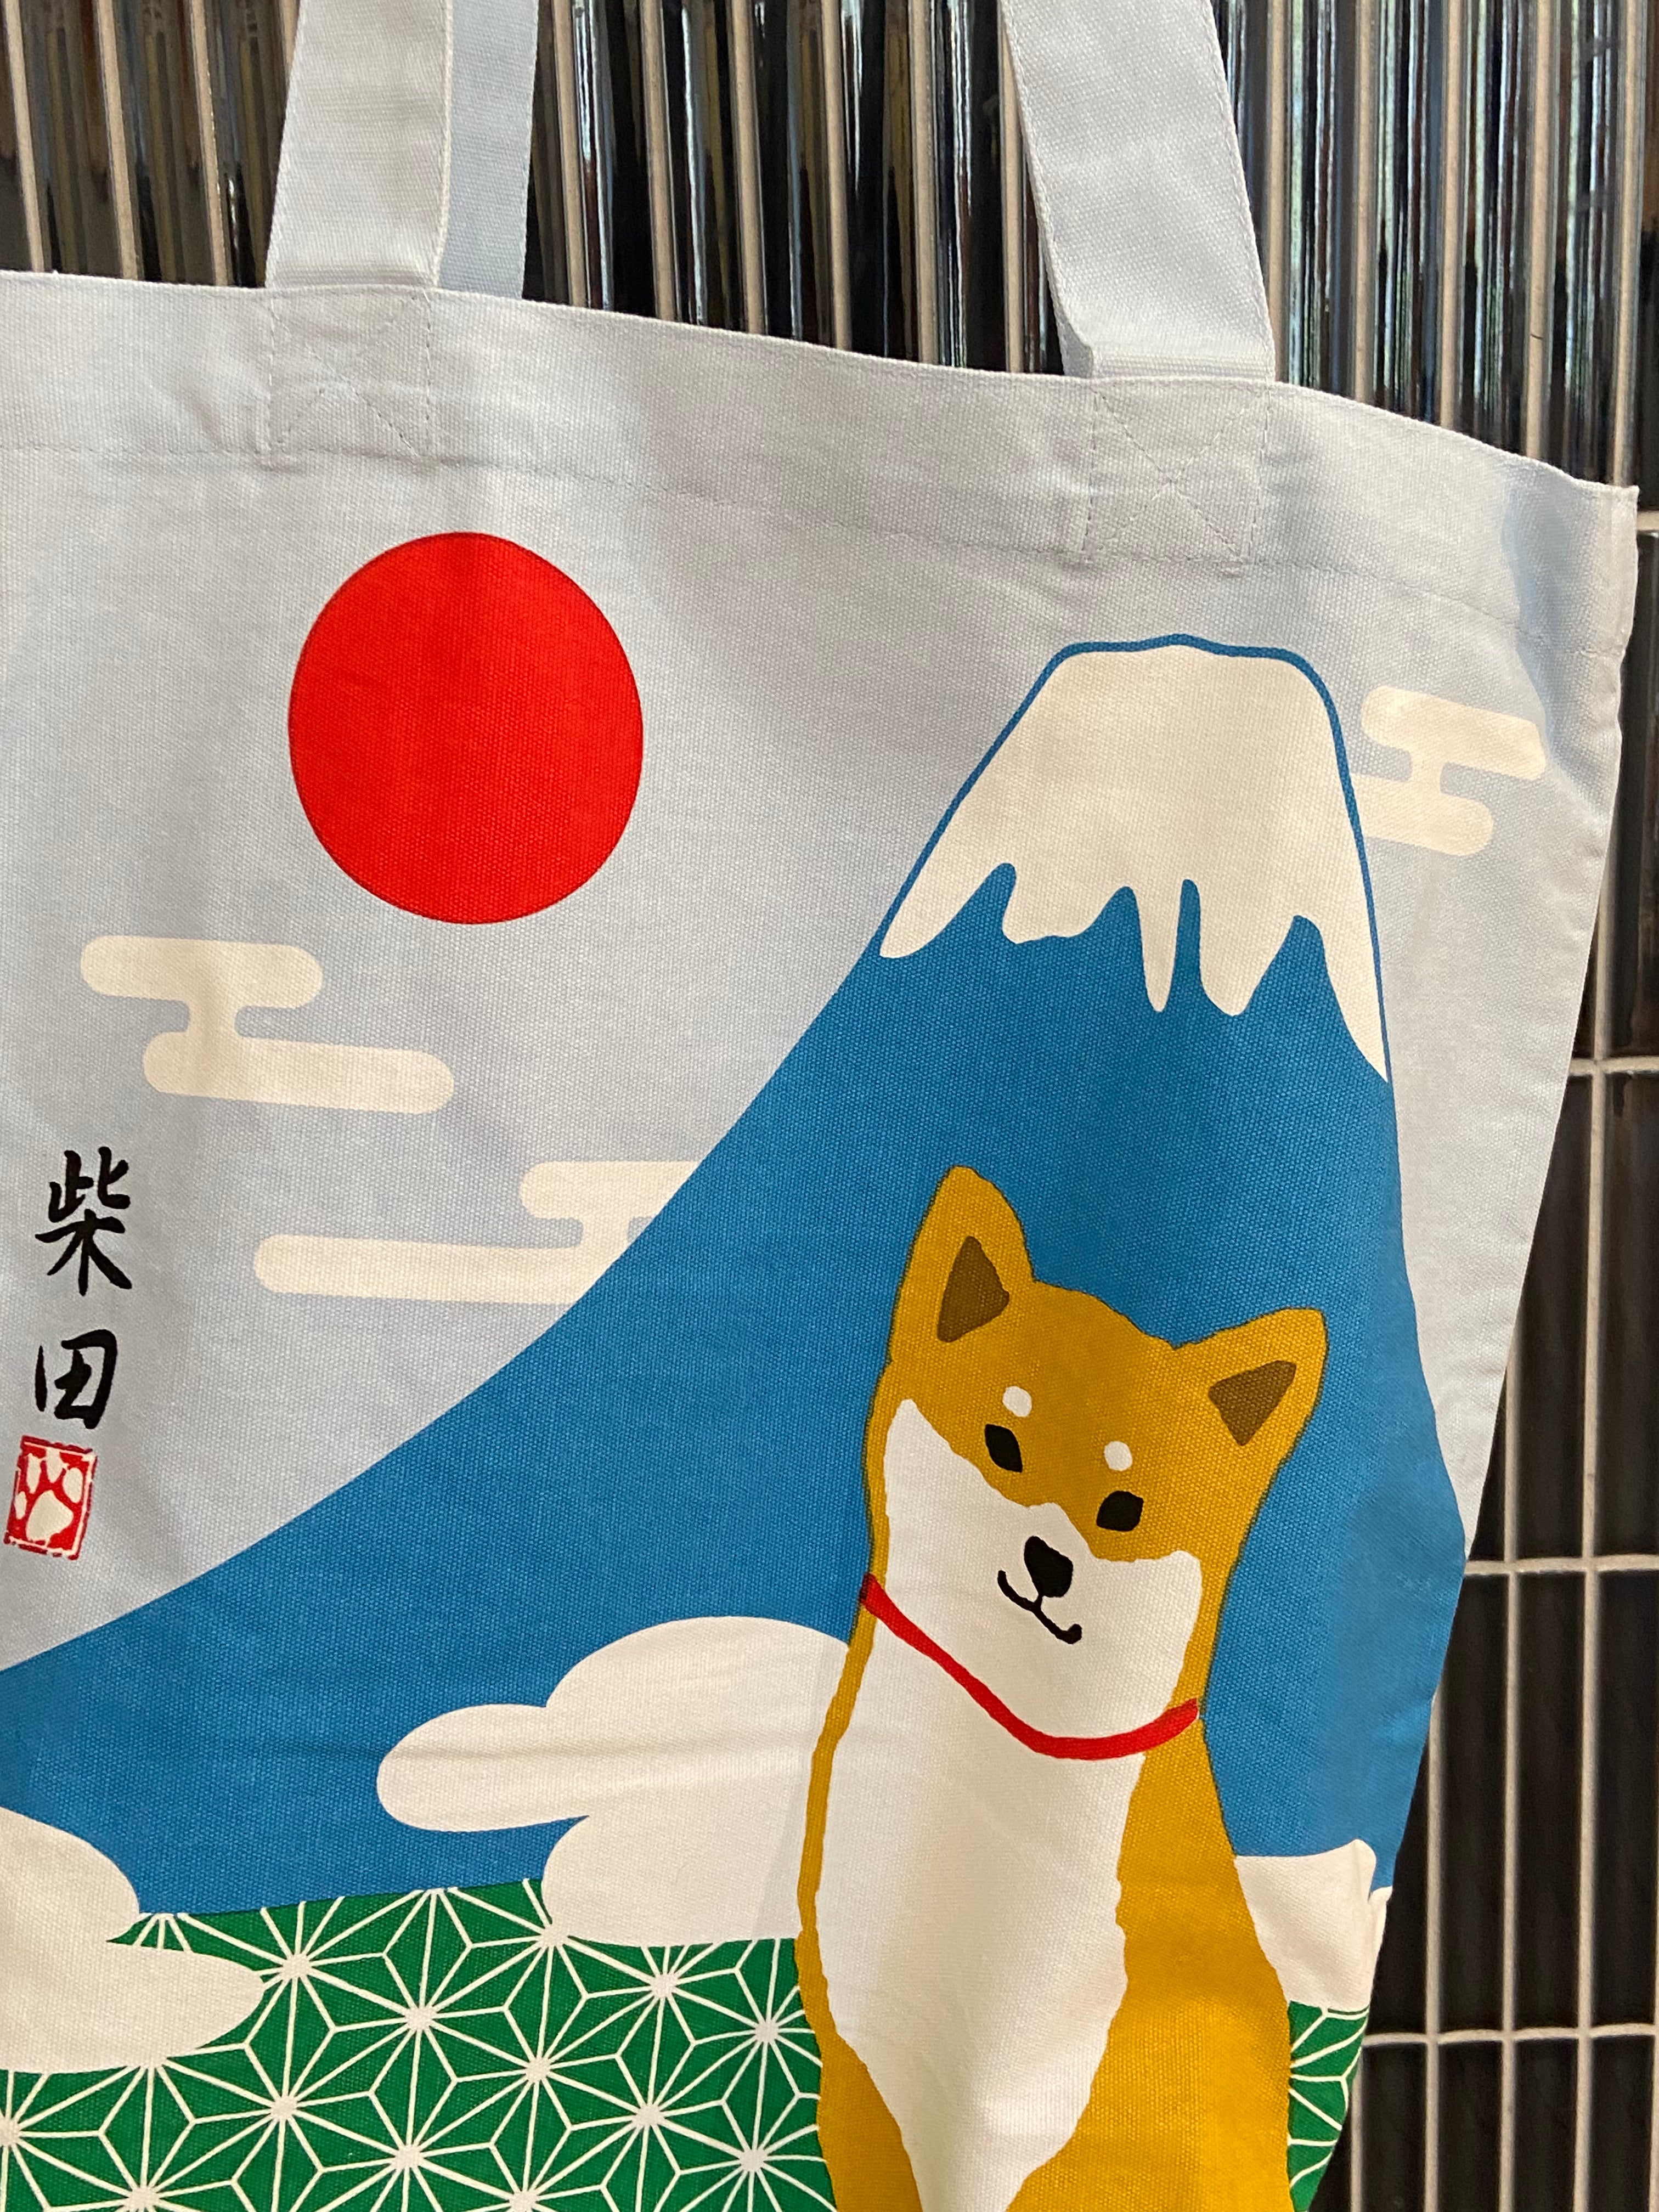 Japanese Tote bag with Shiba and mt. Fuji